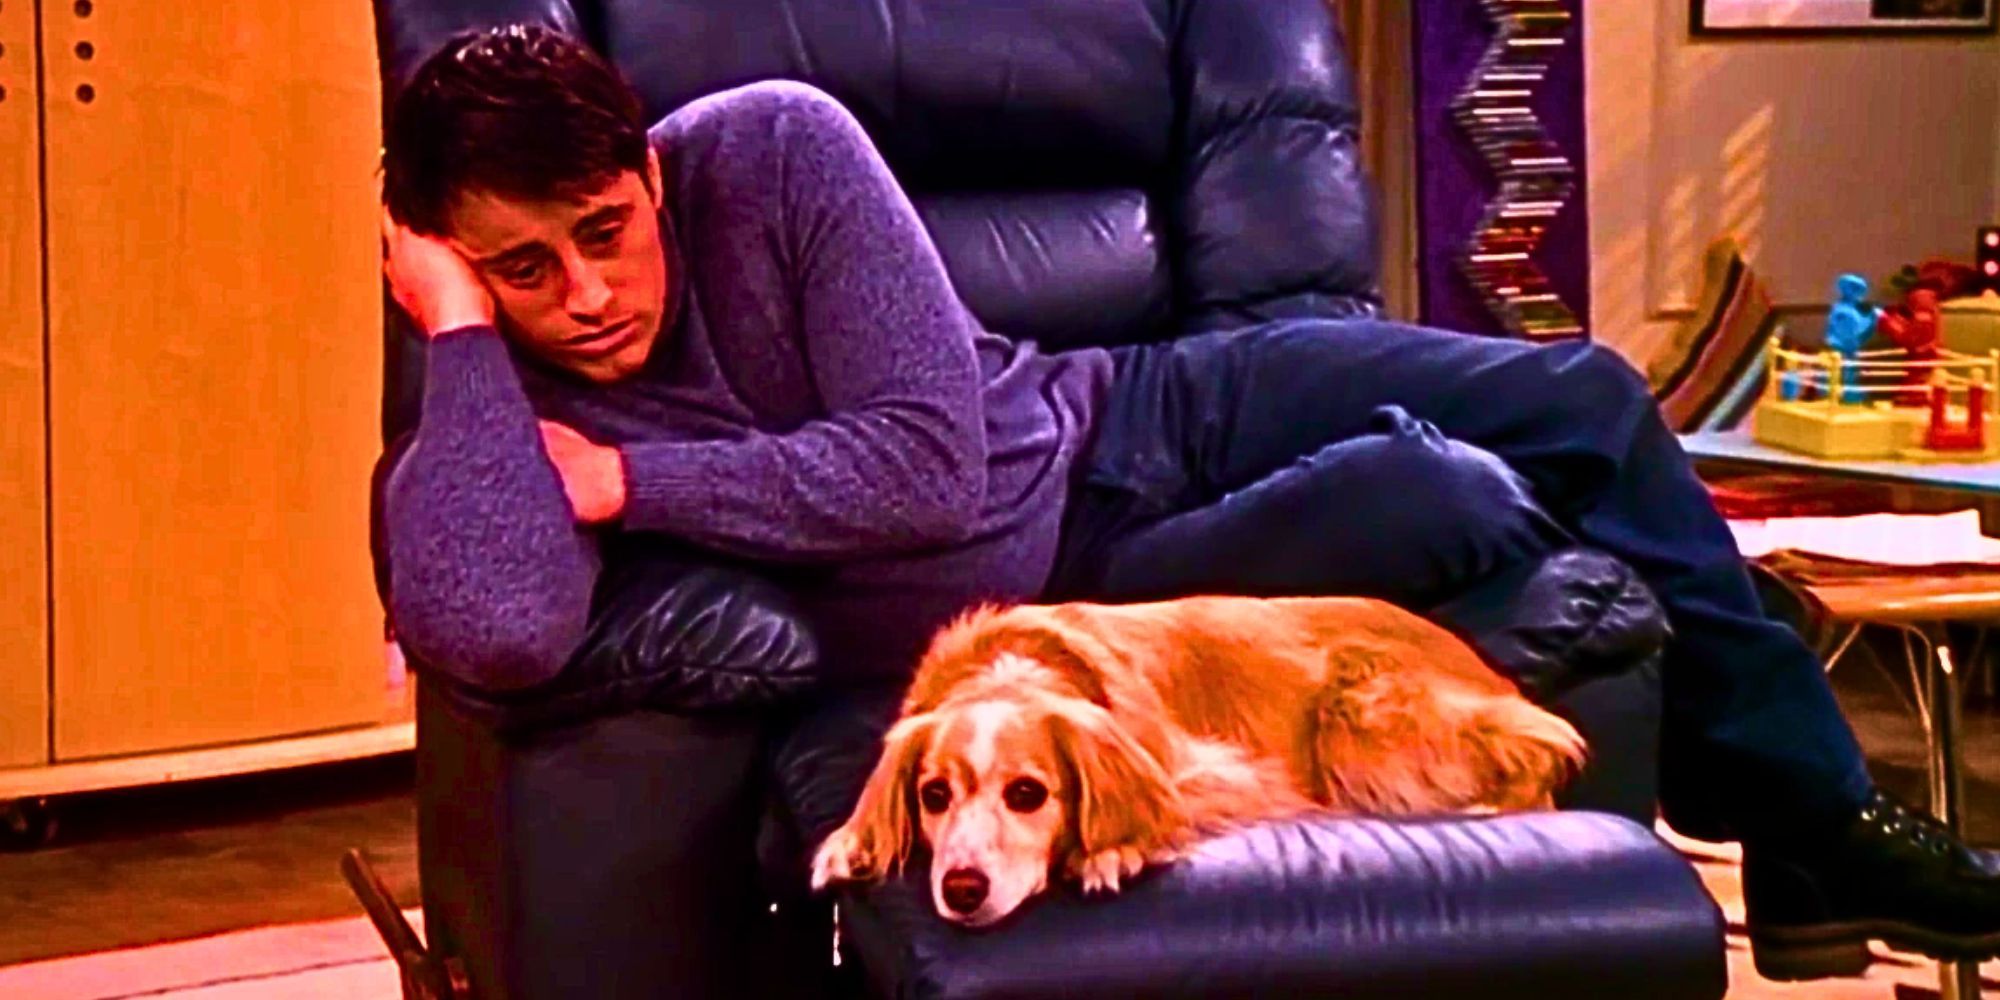 Matt LeBlanc as Joey Tribbiani in Friends looking sad on a chair with an equally sad dog